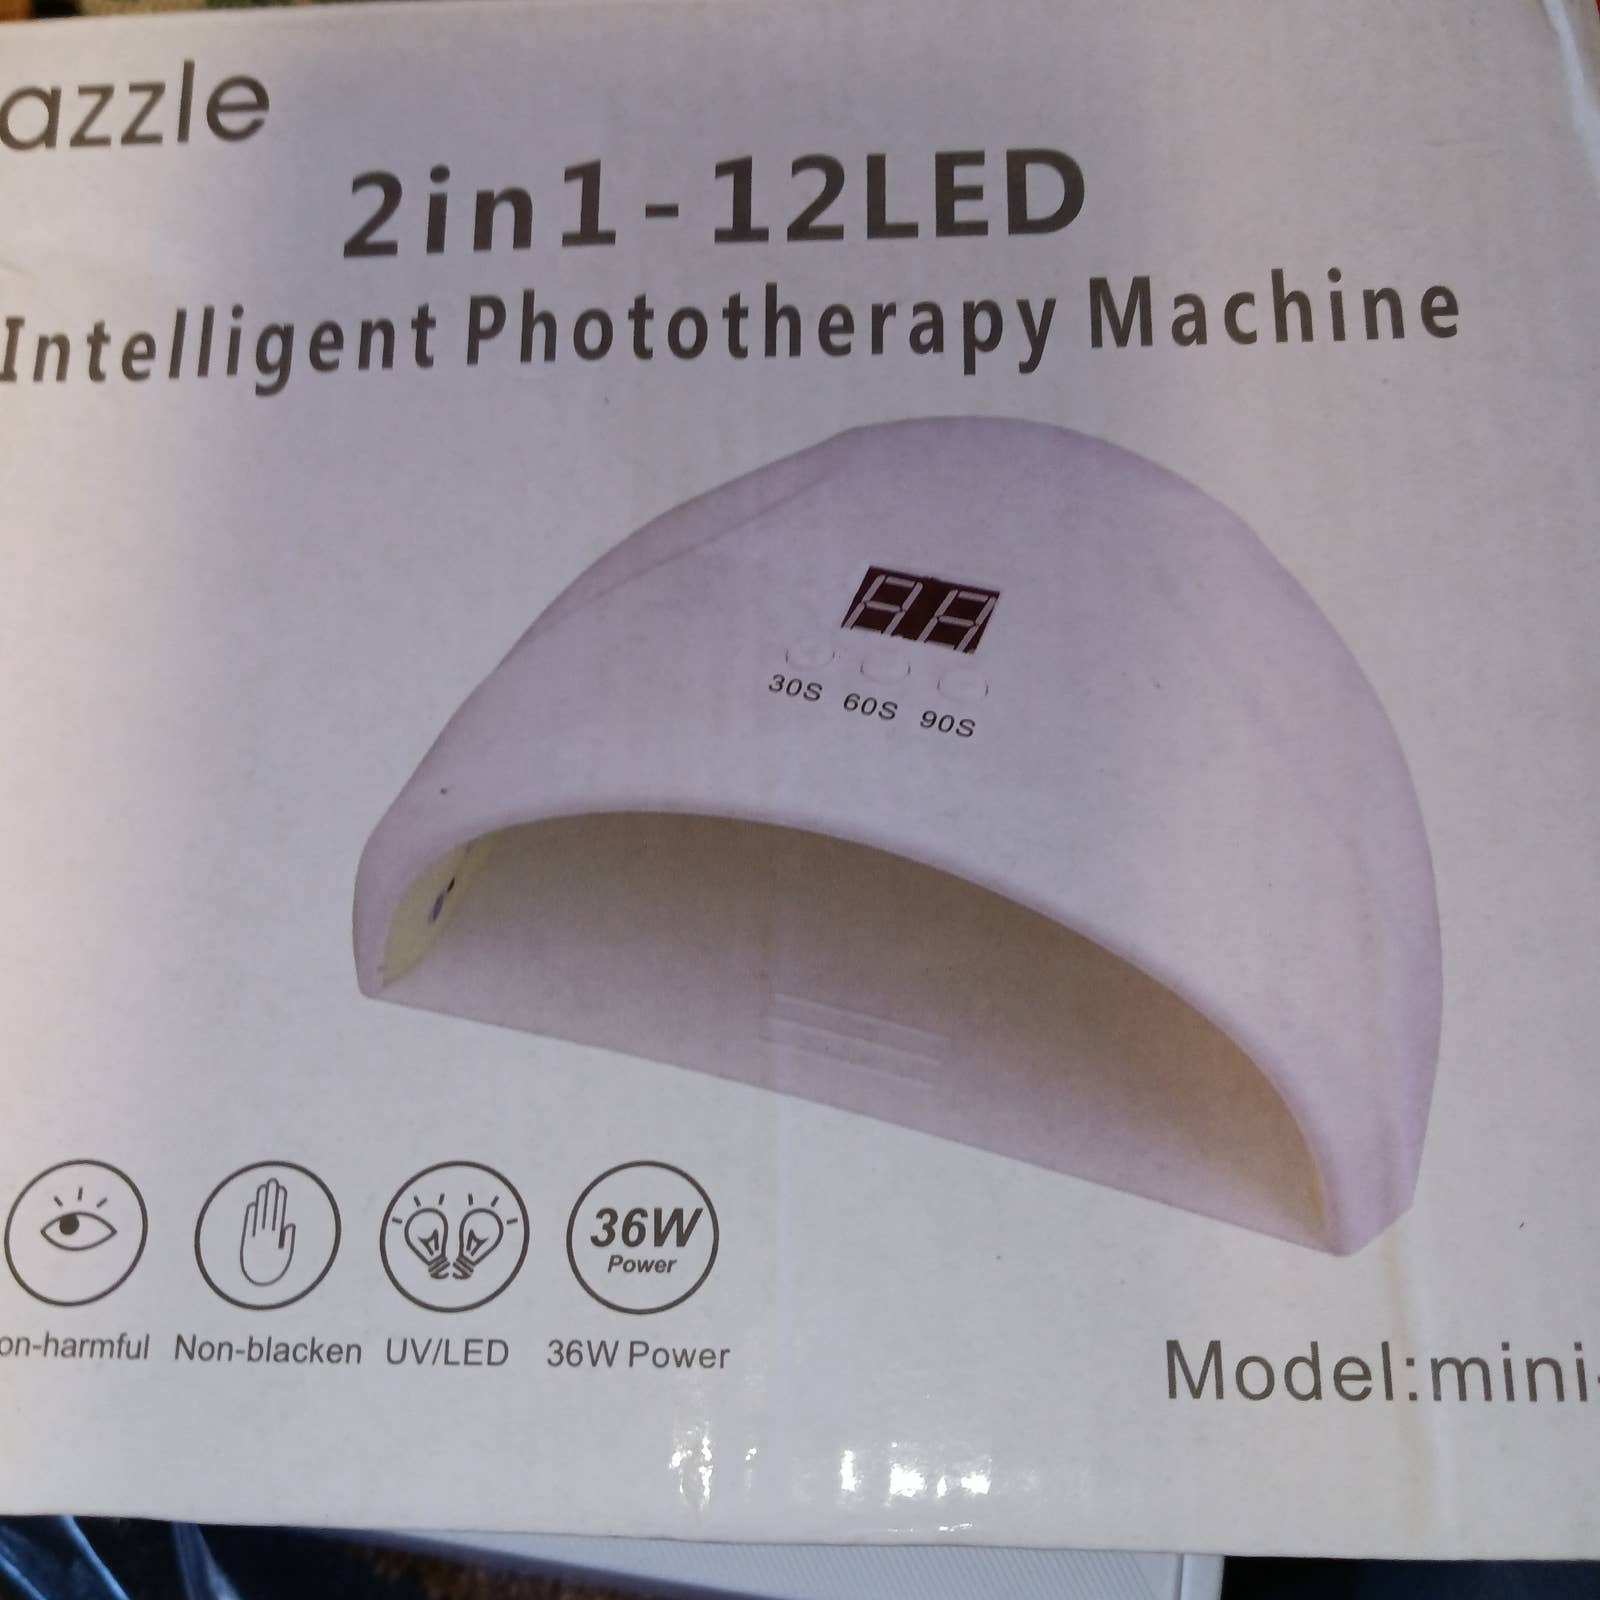 Dazzle 2n1- 12 Led Intelligent Phototherapy Machine